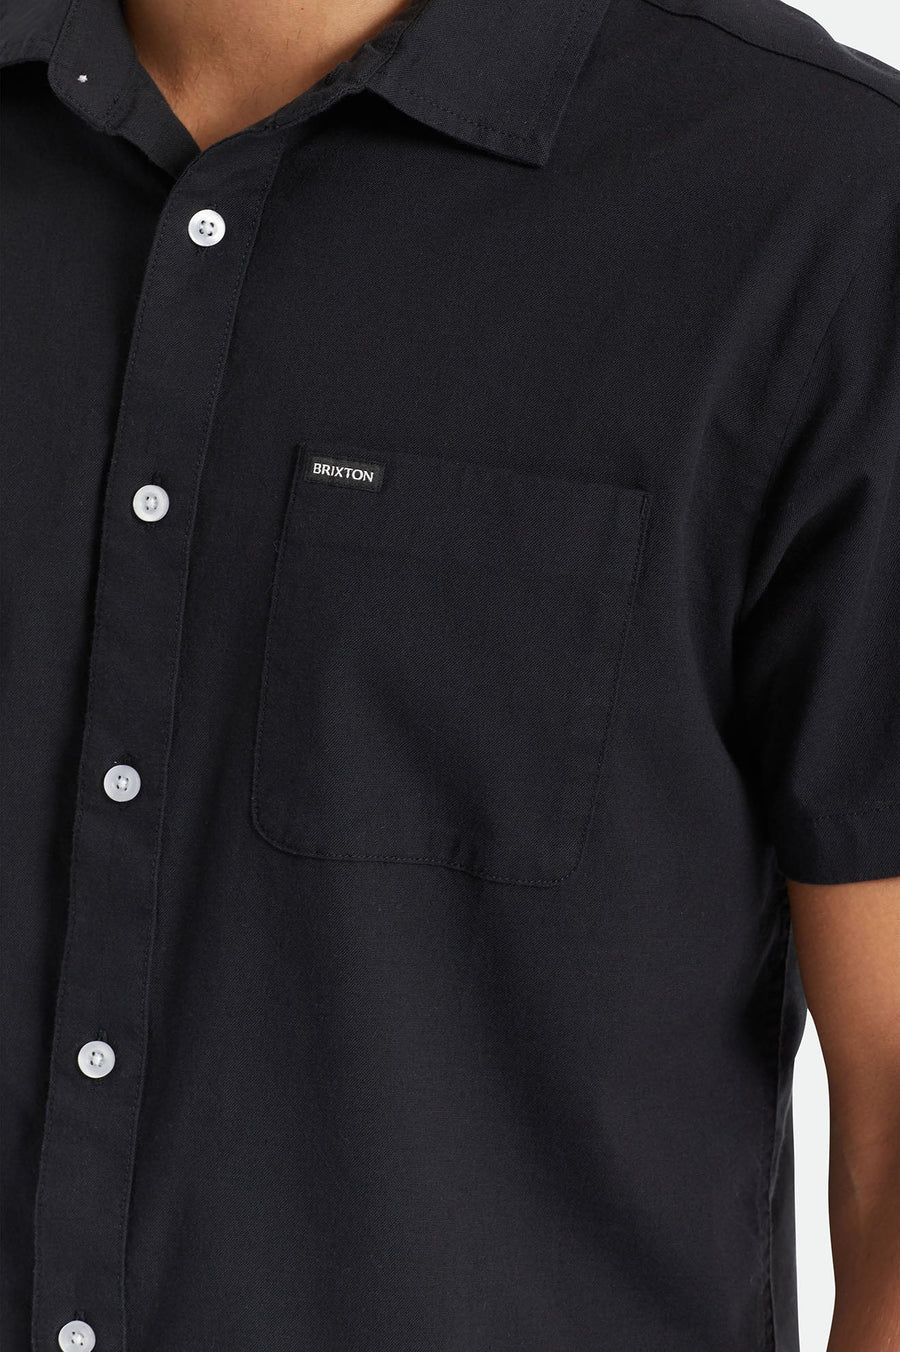 Brixton - Charter Oxford Short Sleeve Shirt in Black